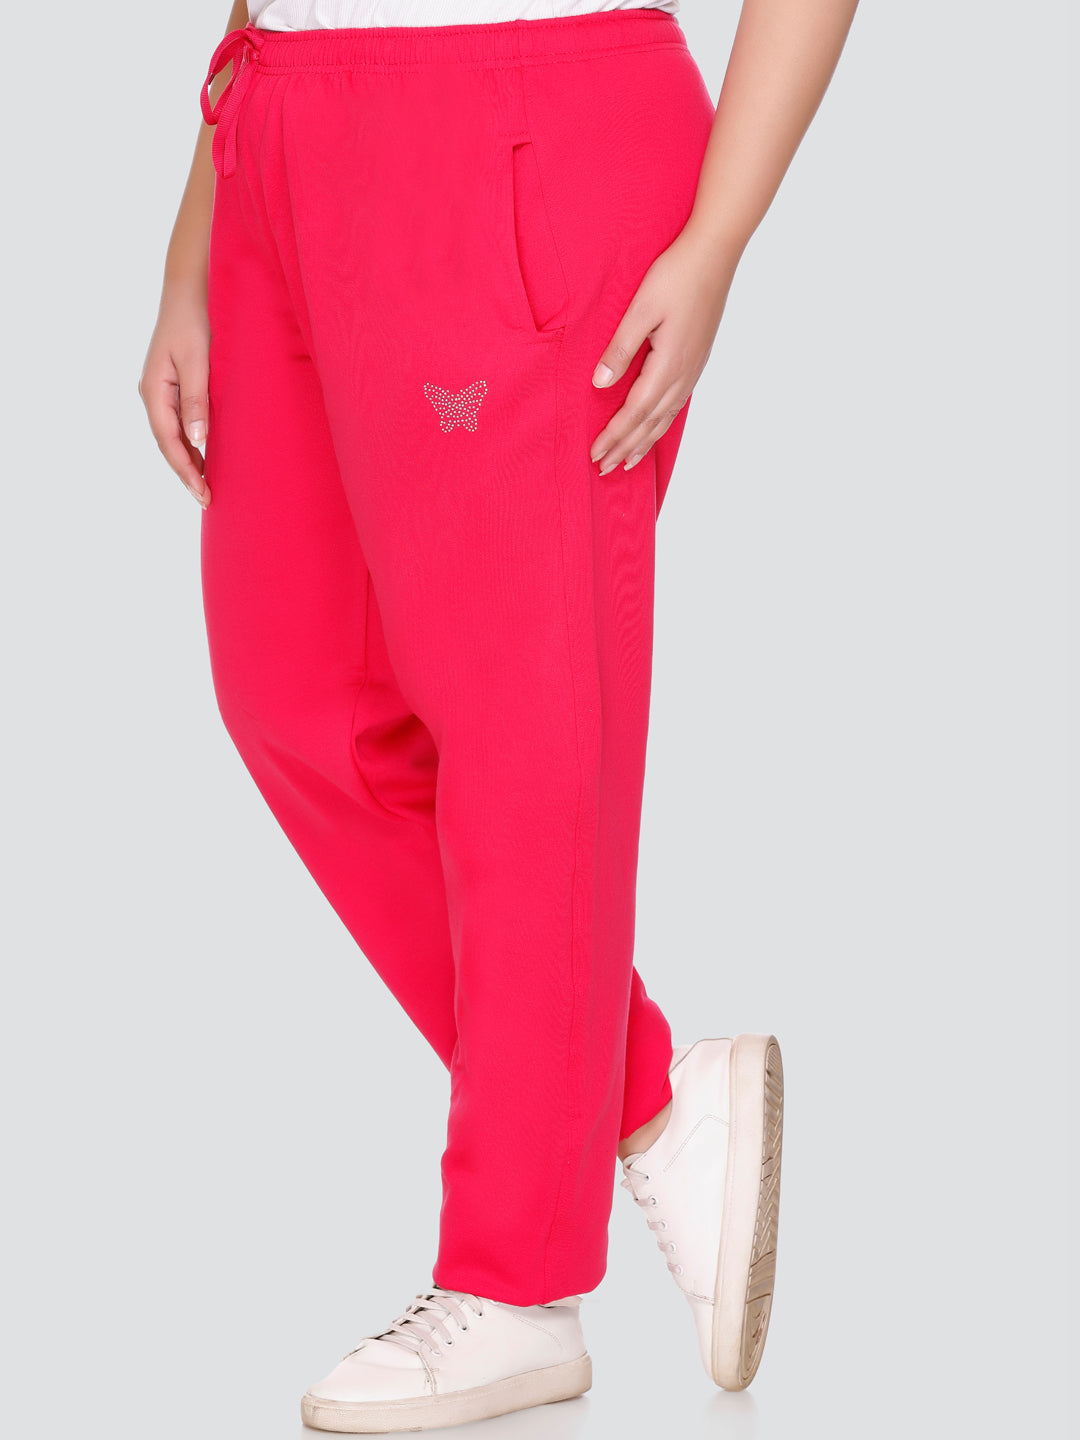 Buy Winter Cotton Fleece Printed Pink Track pants for Women In